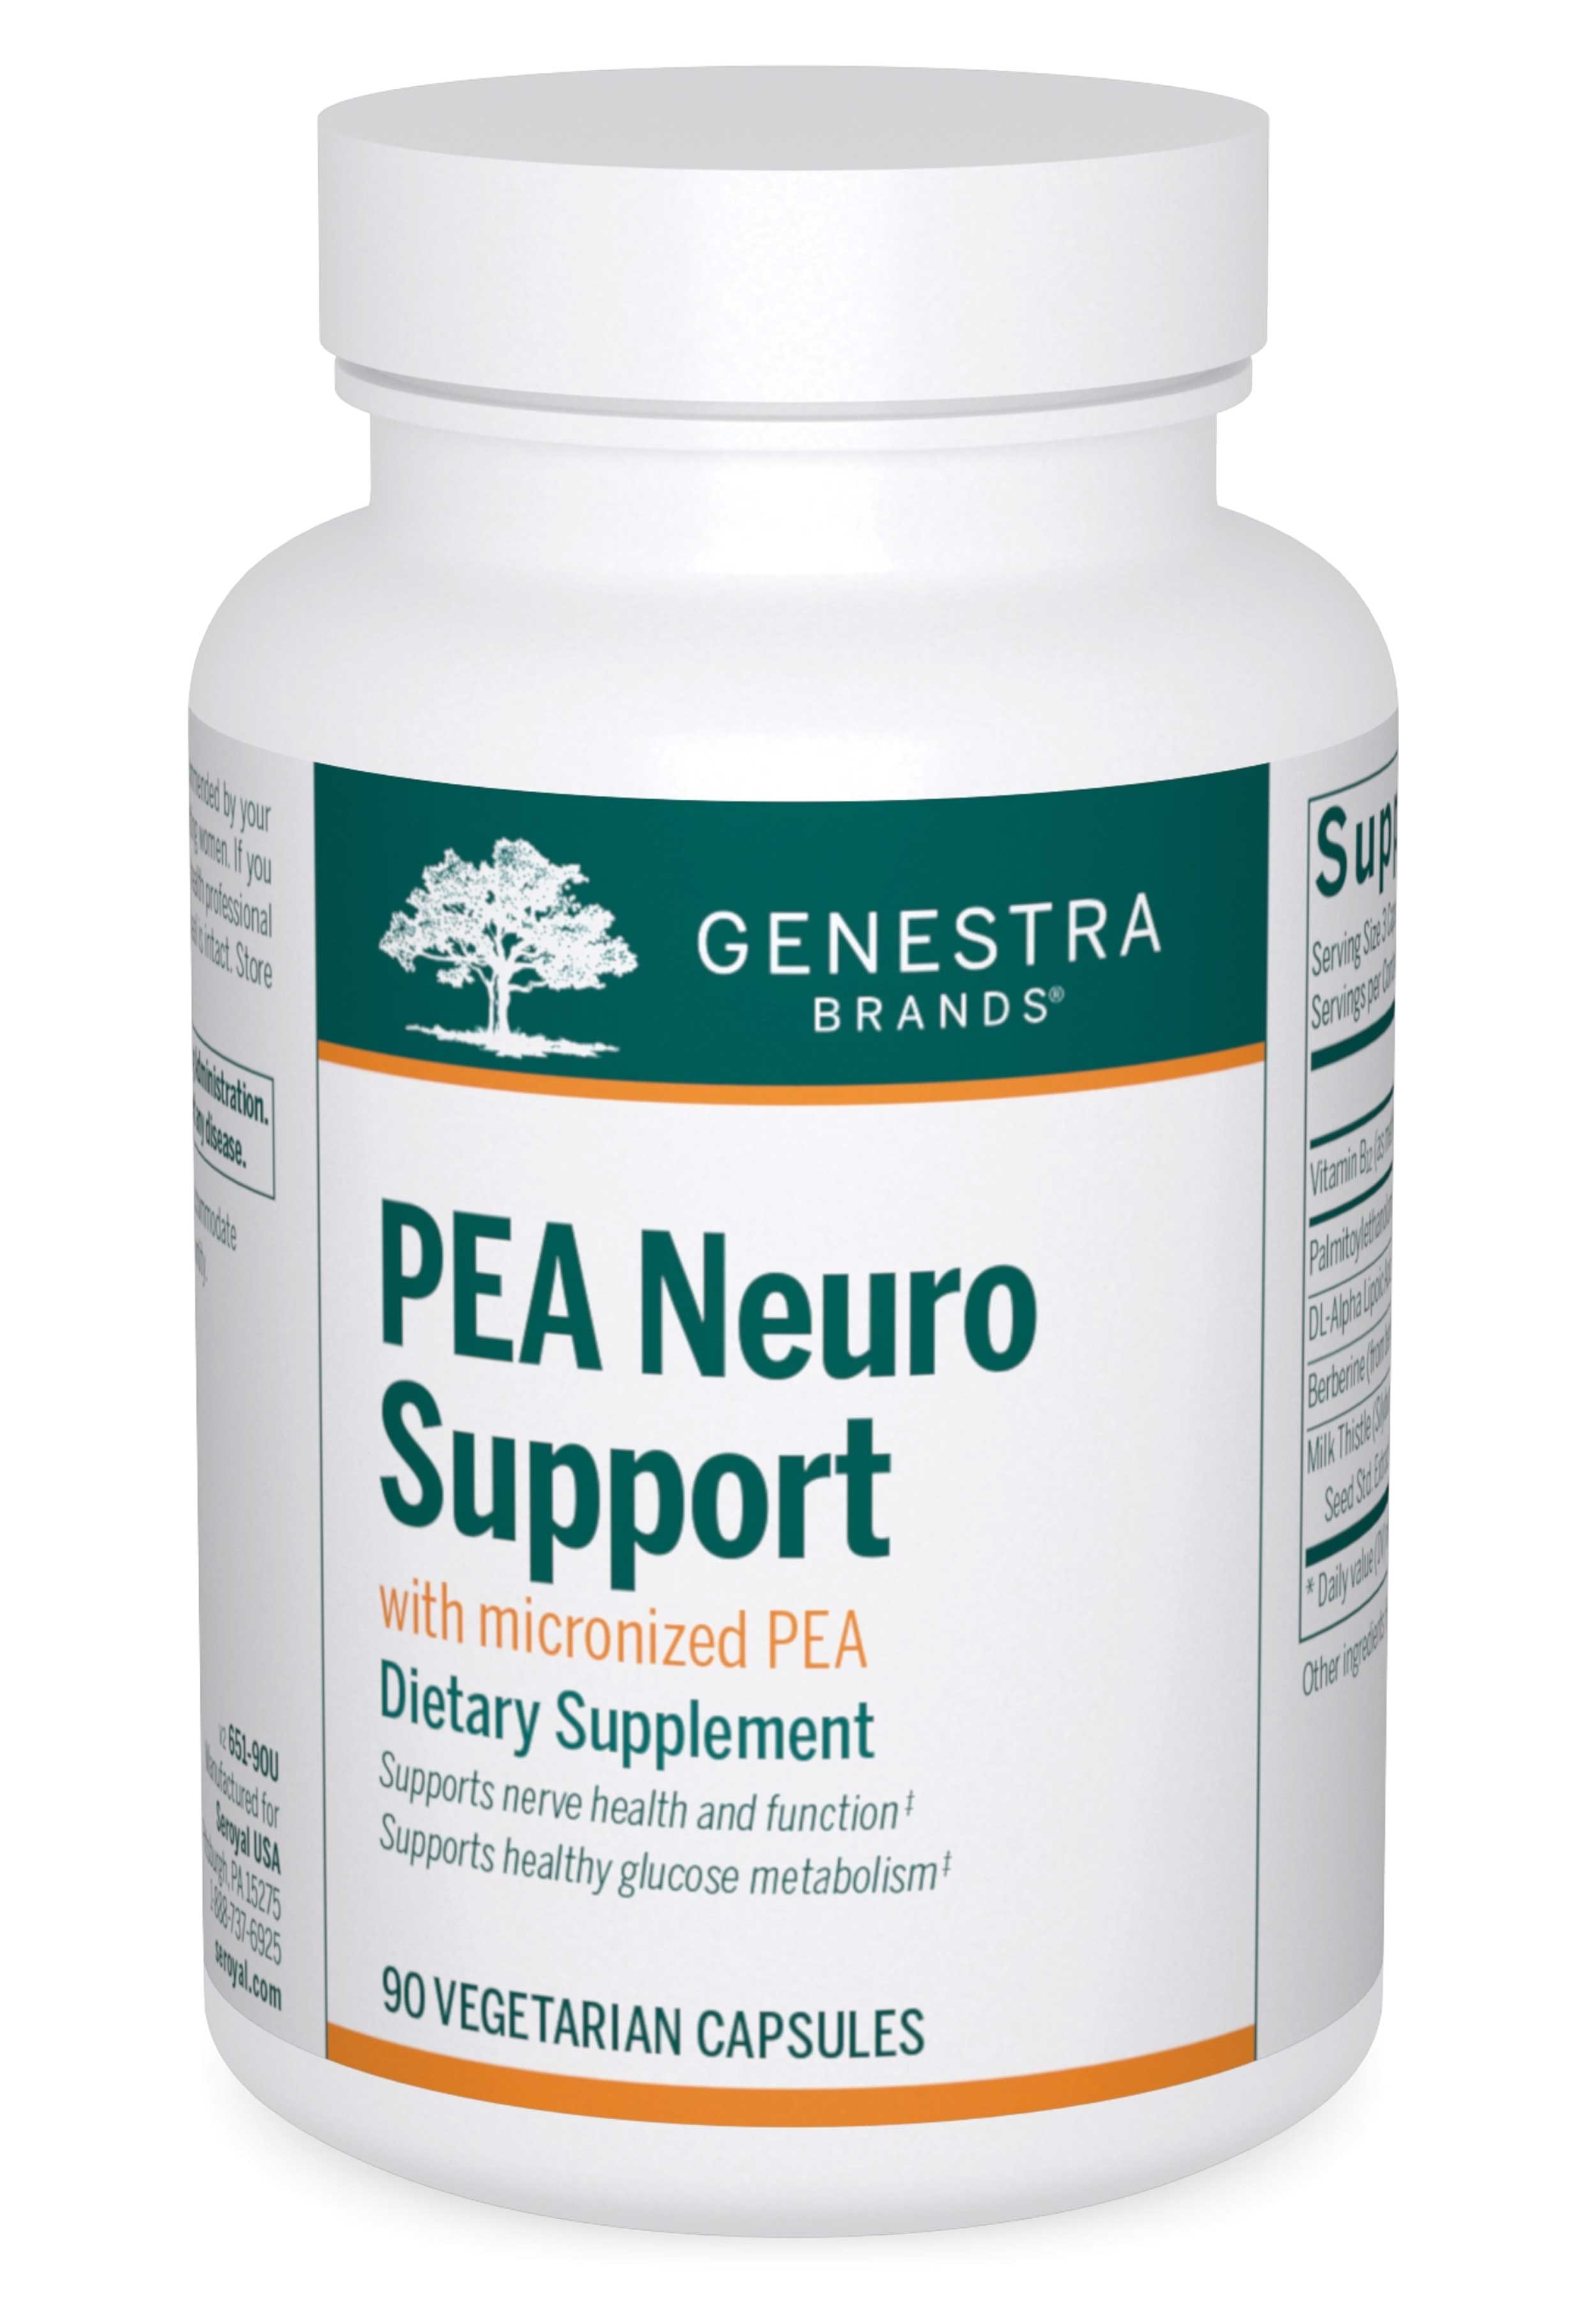 Genestra Brands PEA Neuro Support